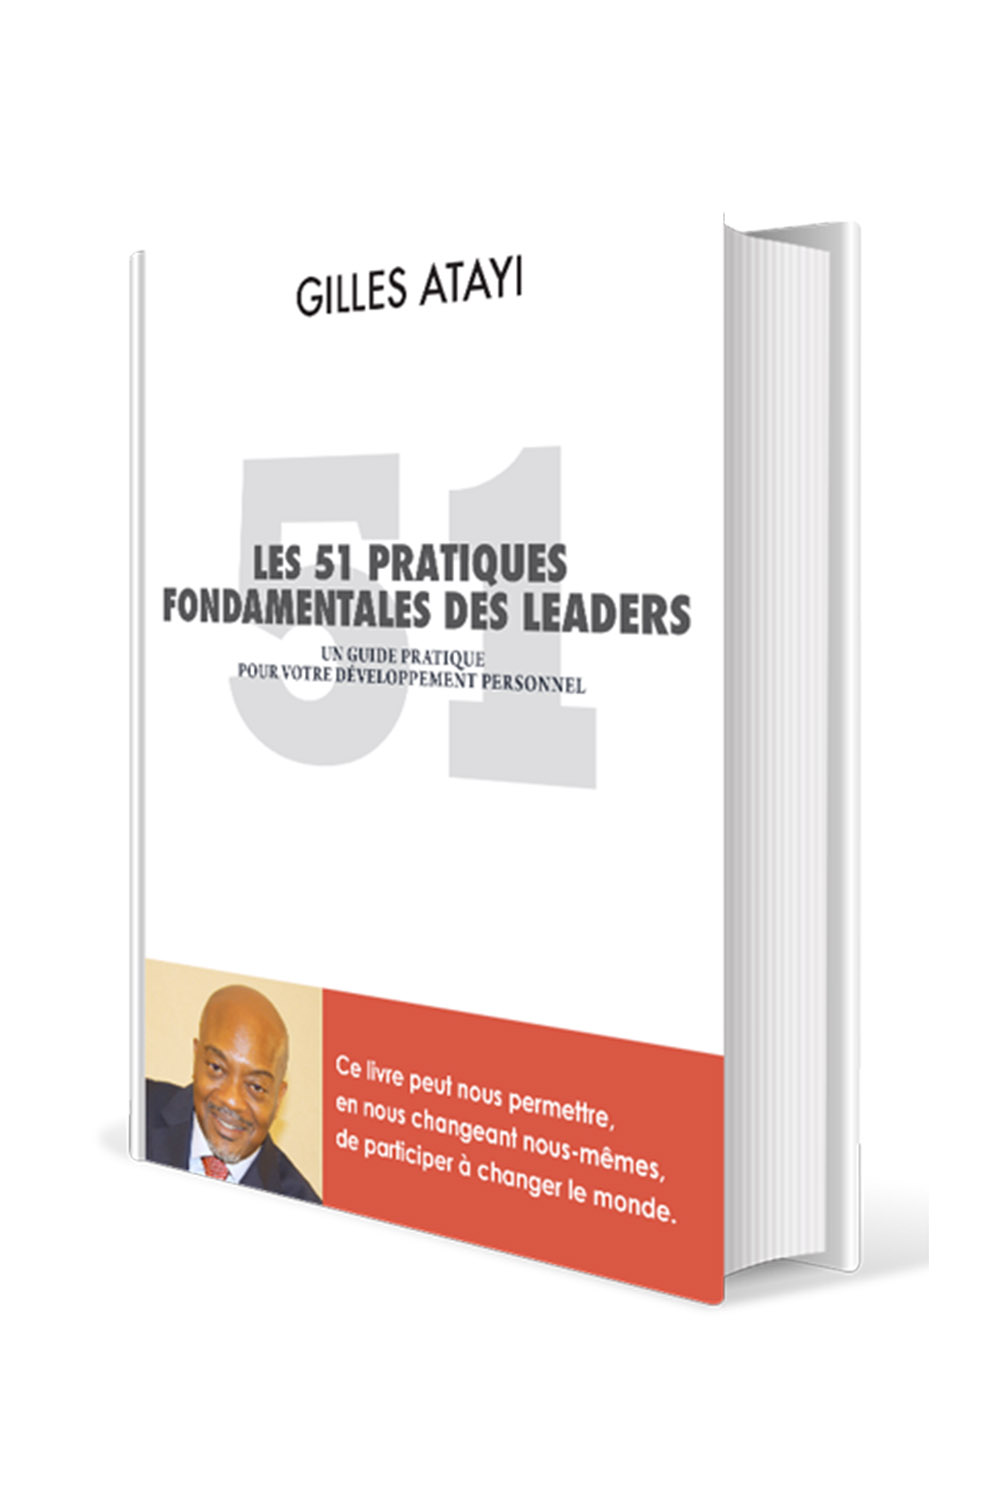  Les 51 pratiques fondamentales des leaders     